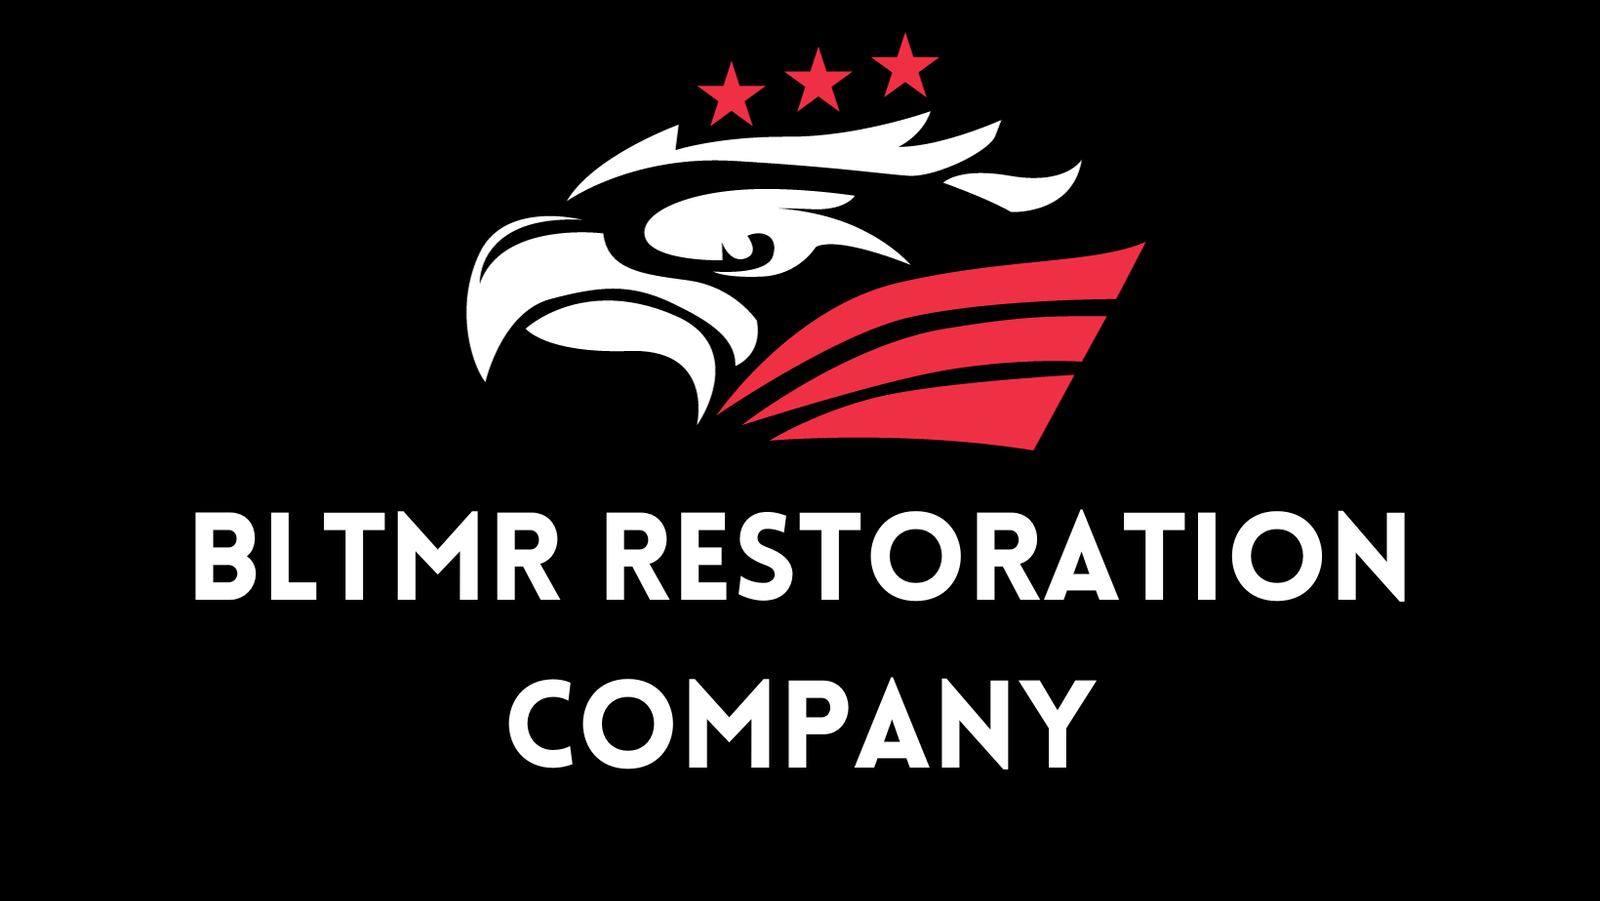 BLTMR RESTORATION COMPANY